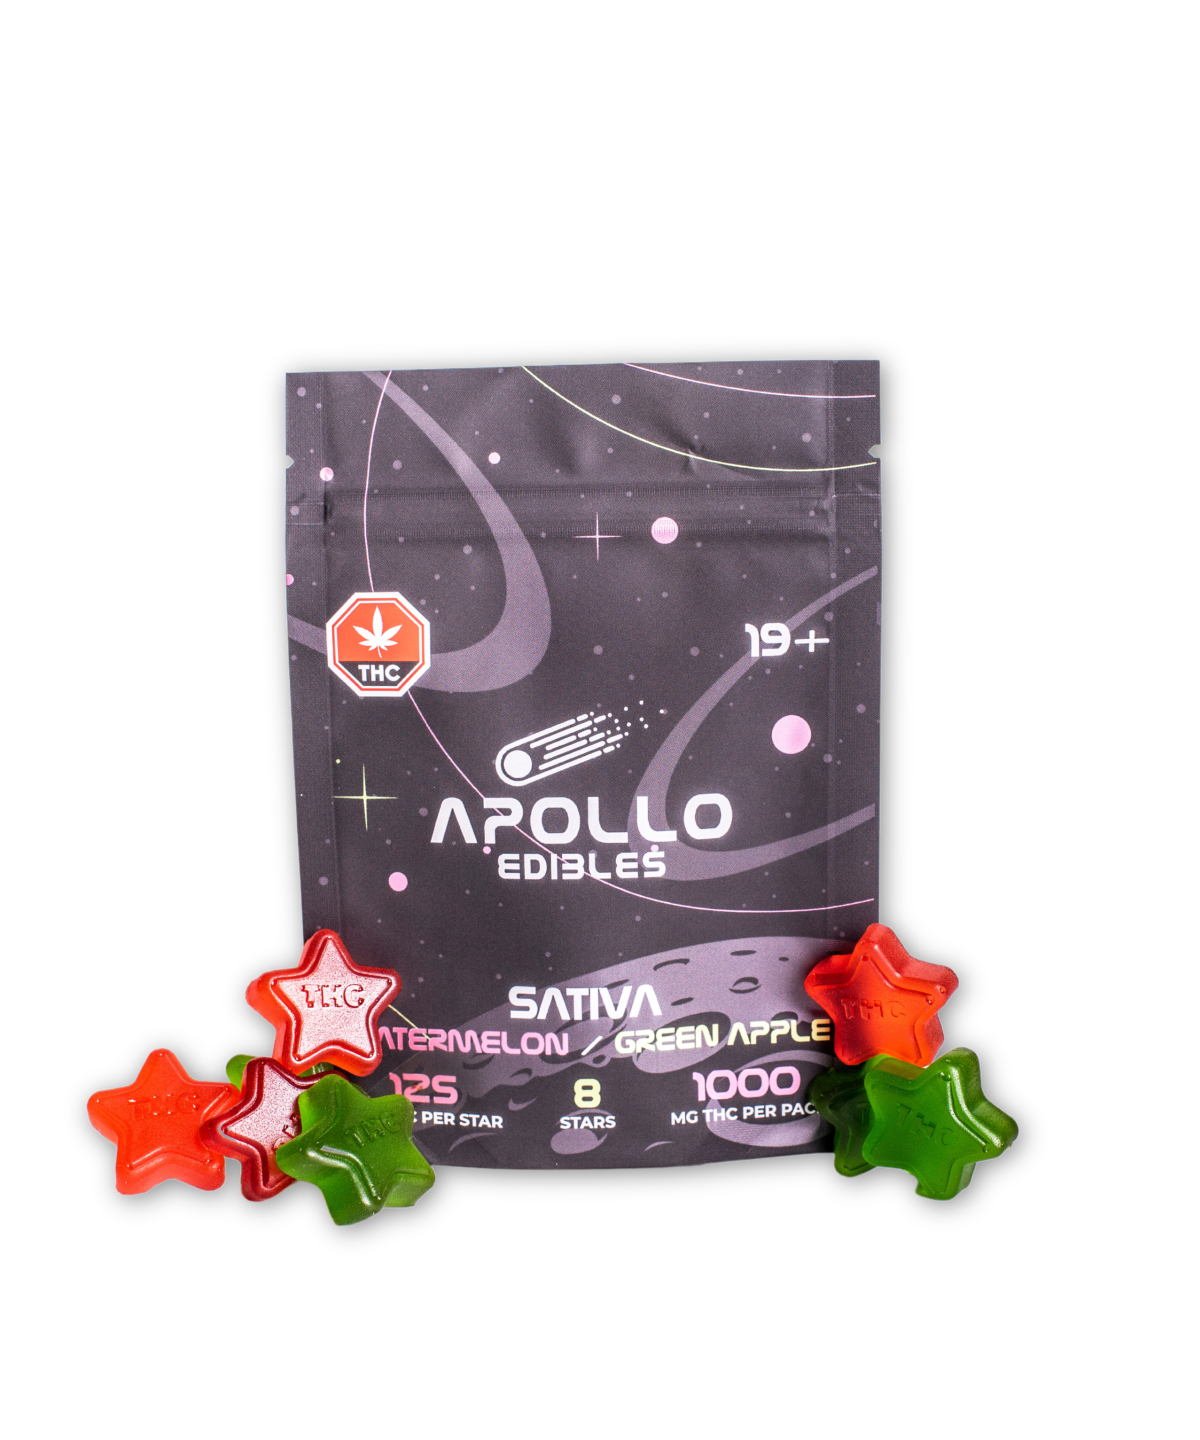 Buy Apollo Watermelon/ Green Apple Star Gummies 1000MG THC (SATIVA) at MMJ Express Online Shop